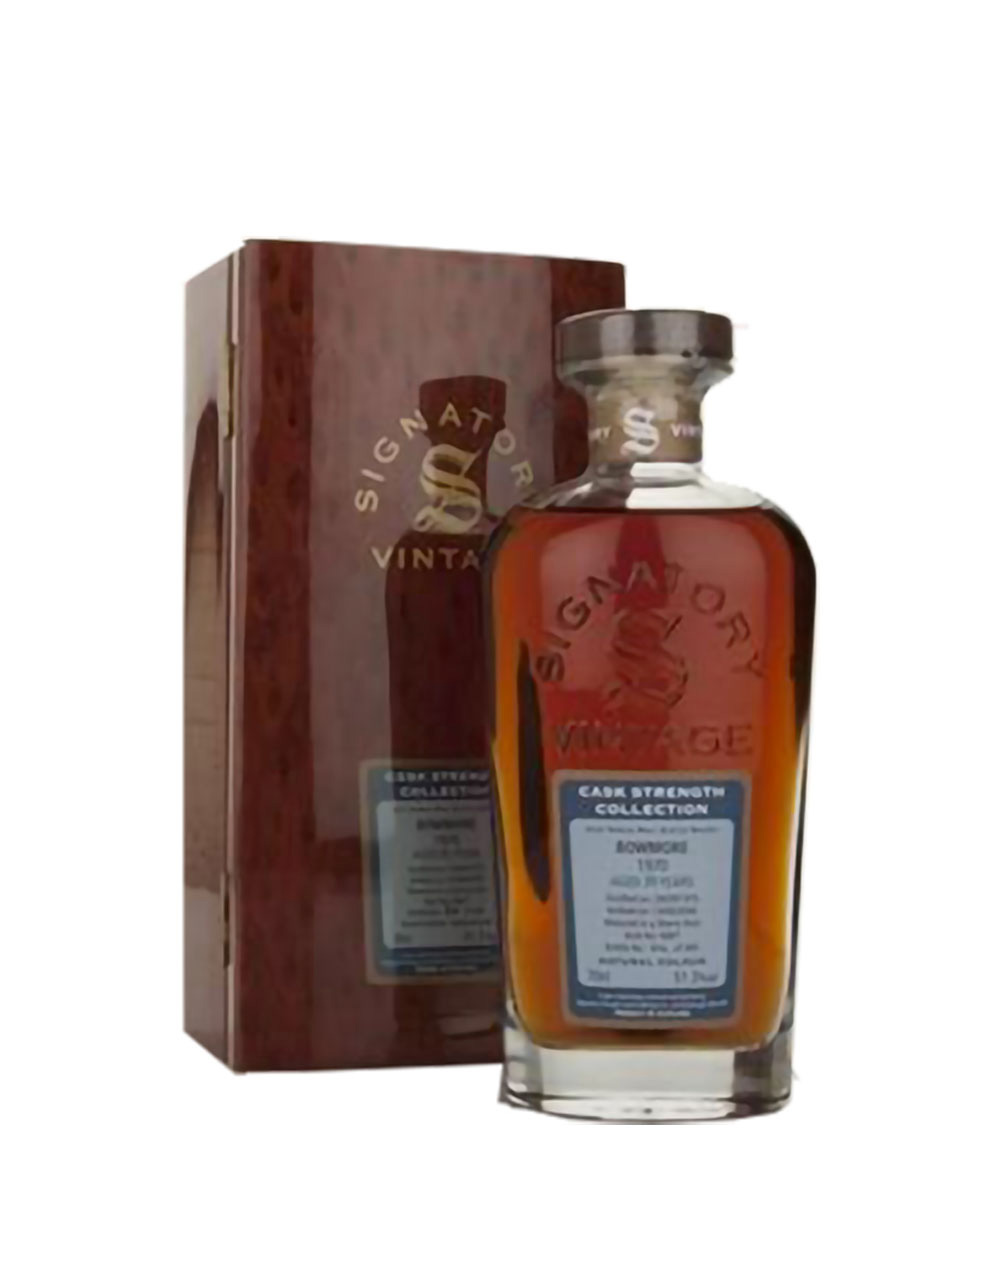 Bowmore 35 Year Old Rare Reserve Single Malt Scotch Whisky (Signatory Bottling)